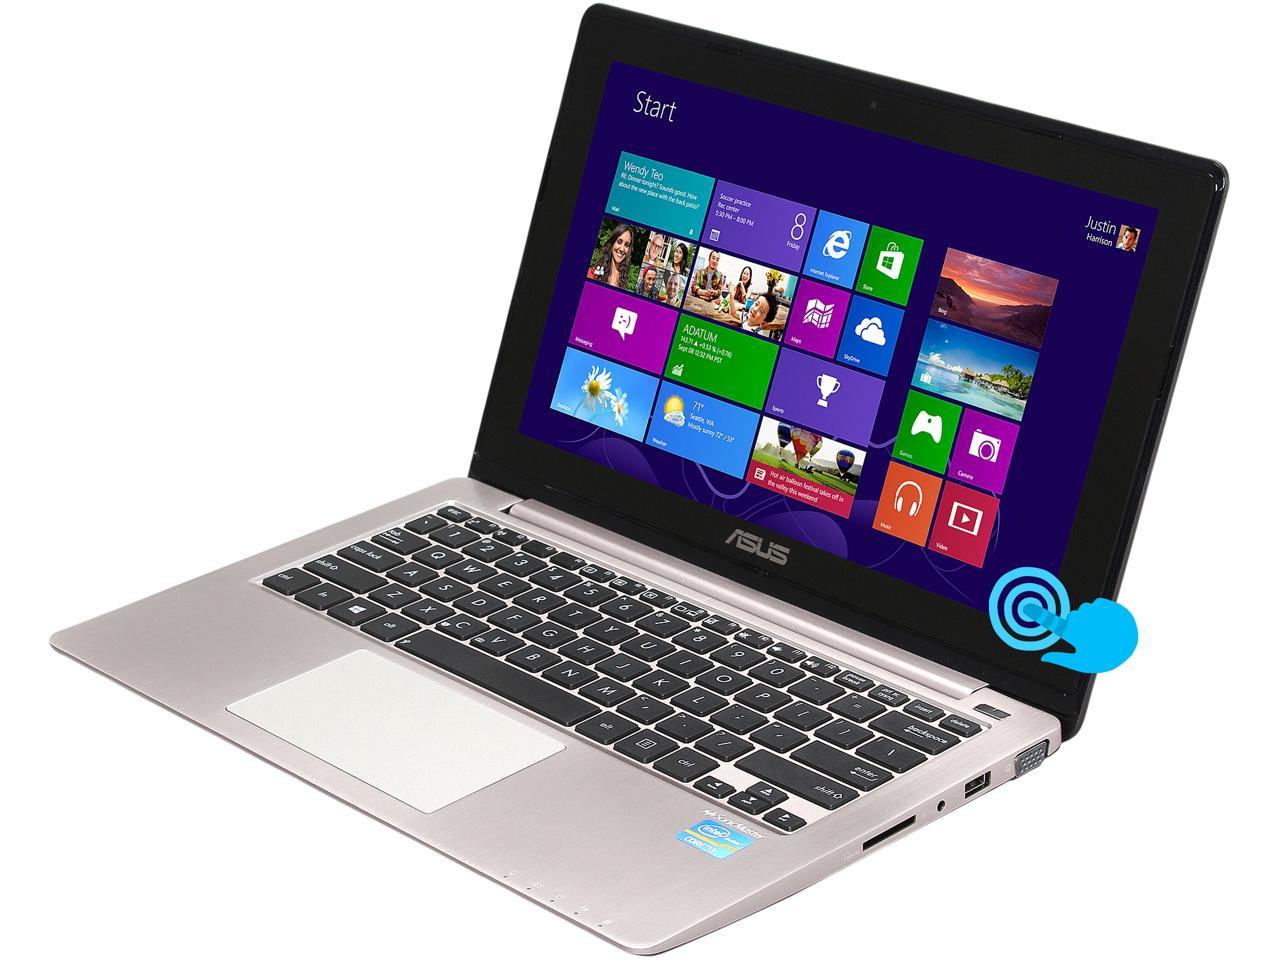 ASUS Laptop VivoBook X202E-DH31T Intel Core i3 3rd Gen 3217U 